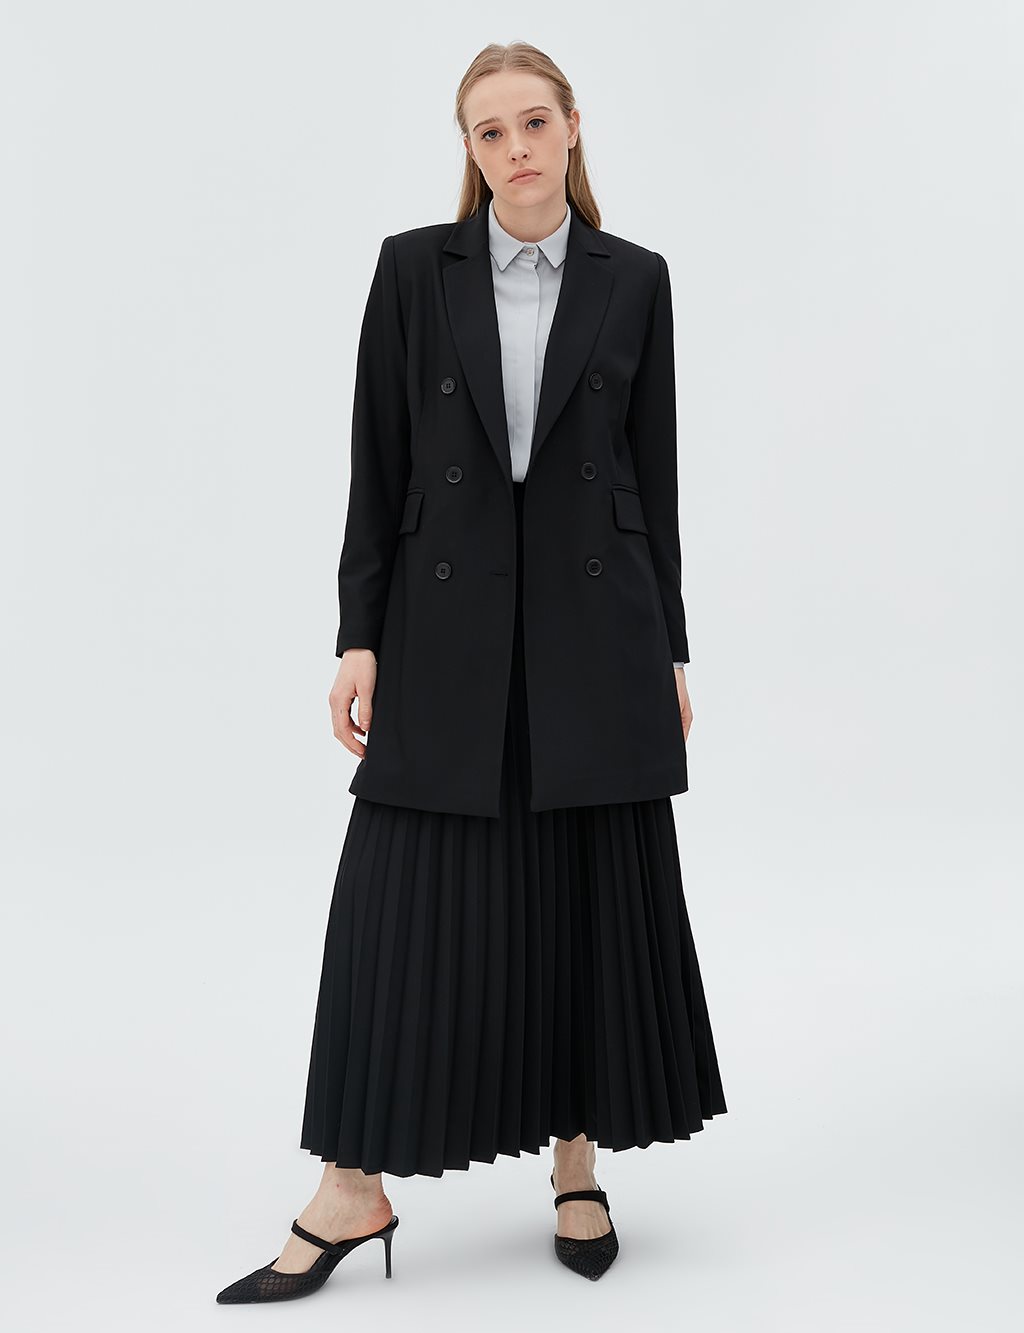 Basic Pleated Skirt SZ 12501 Black